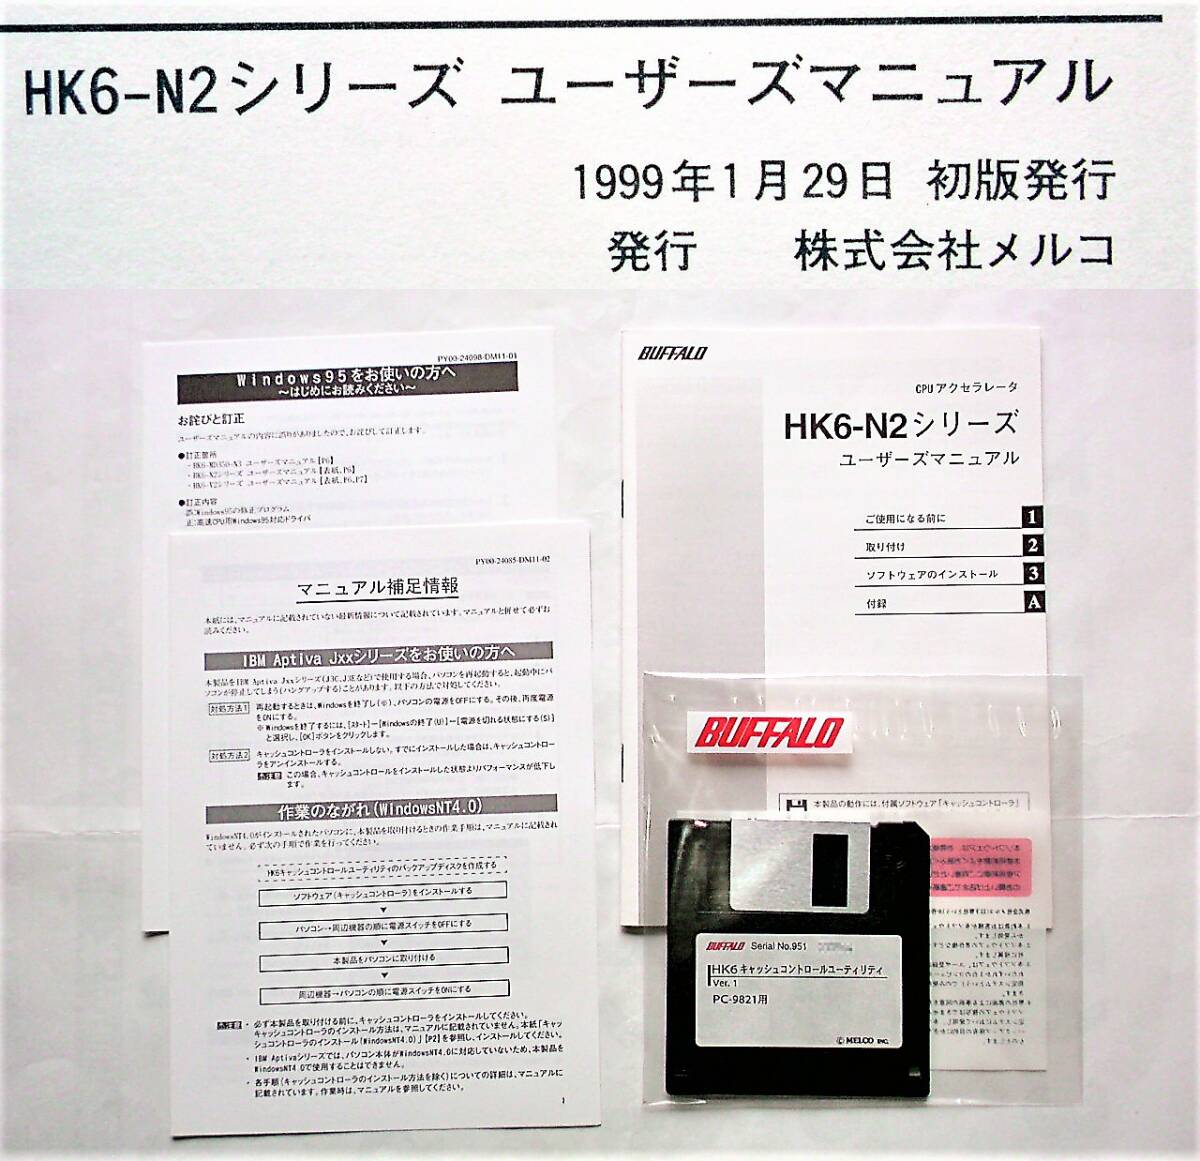 [ Junk ]PC-9821 series for CPU accelerator :BUFFALO HK6-MD366-N2lAMD-K6-2/366 processor installing [ operation not yet verification ]